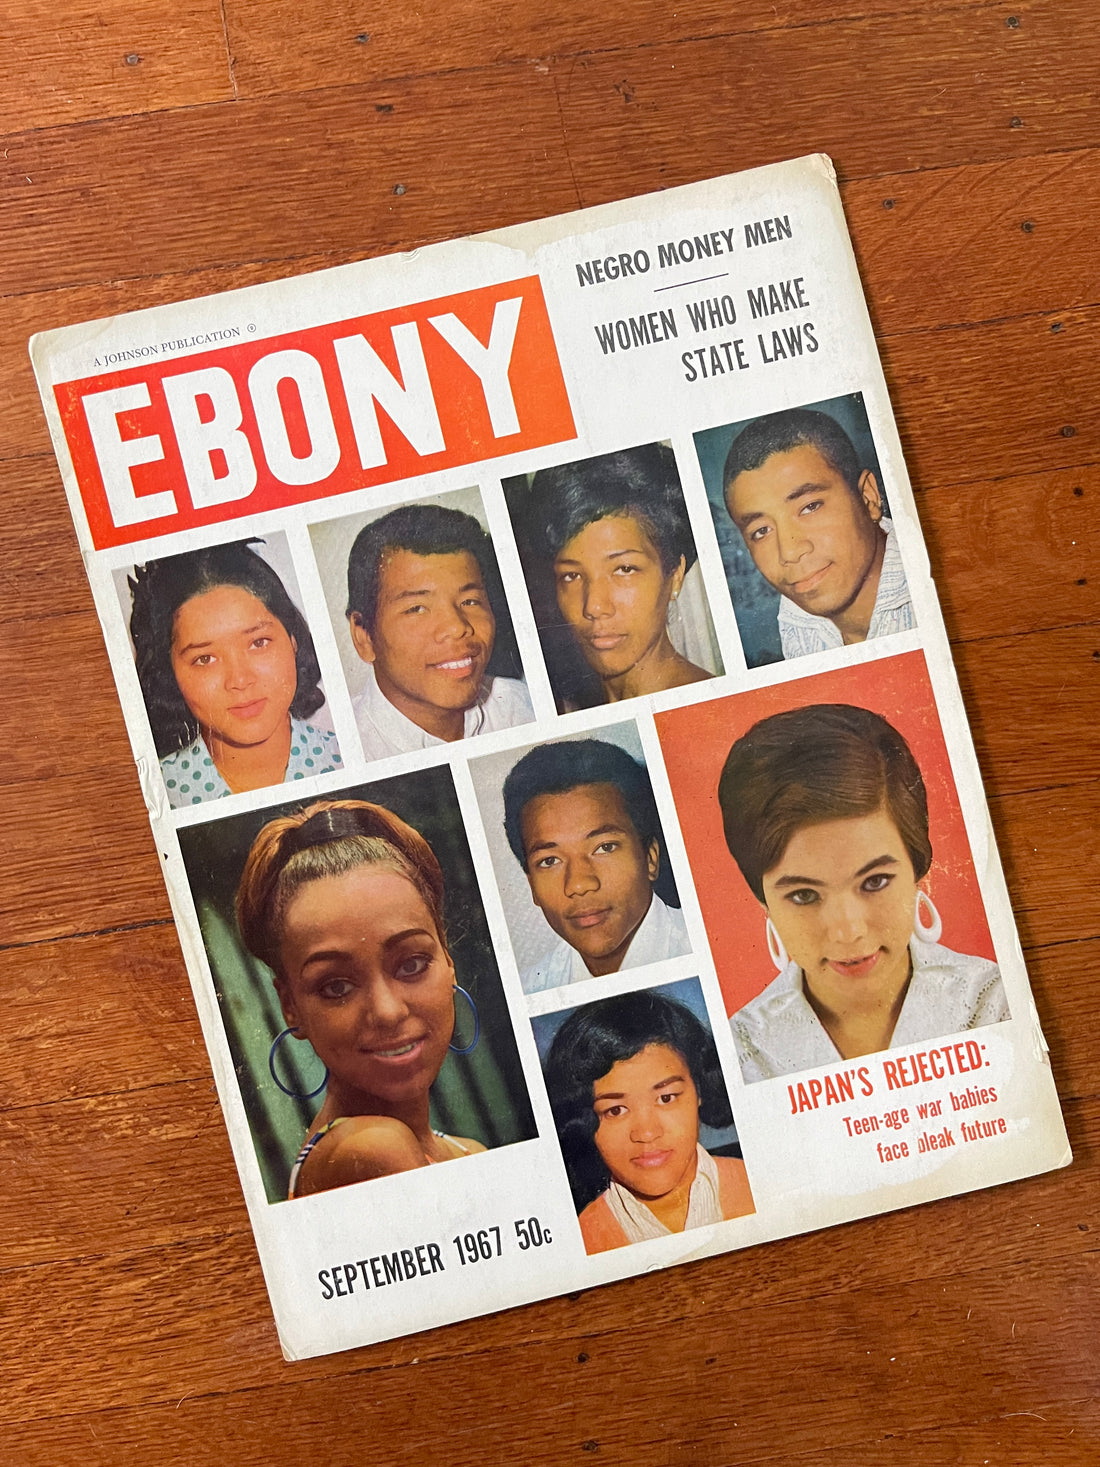 Vintage Rare Ebony Magazine Merchandising Display Cover Poster (September 1967)